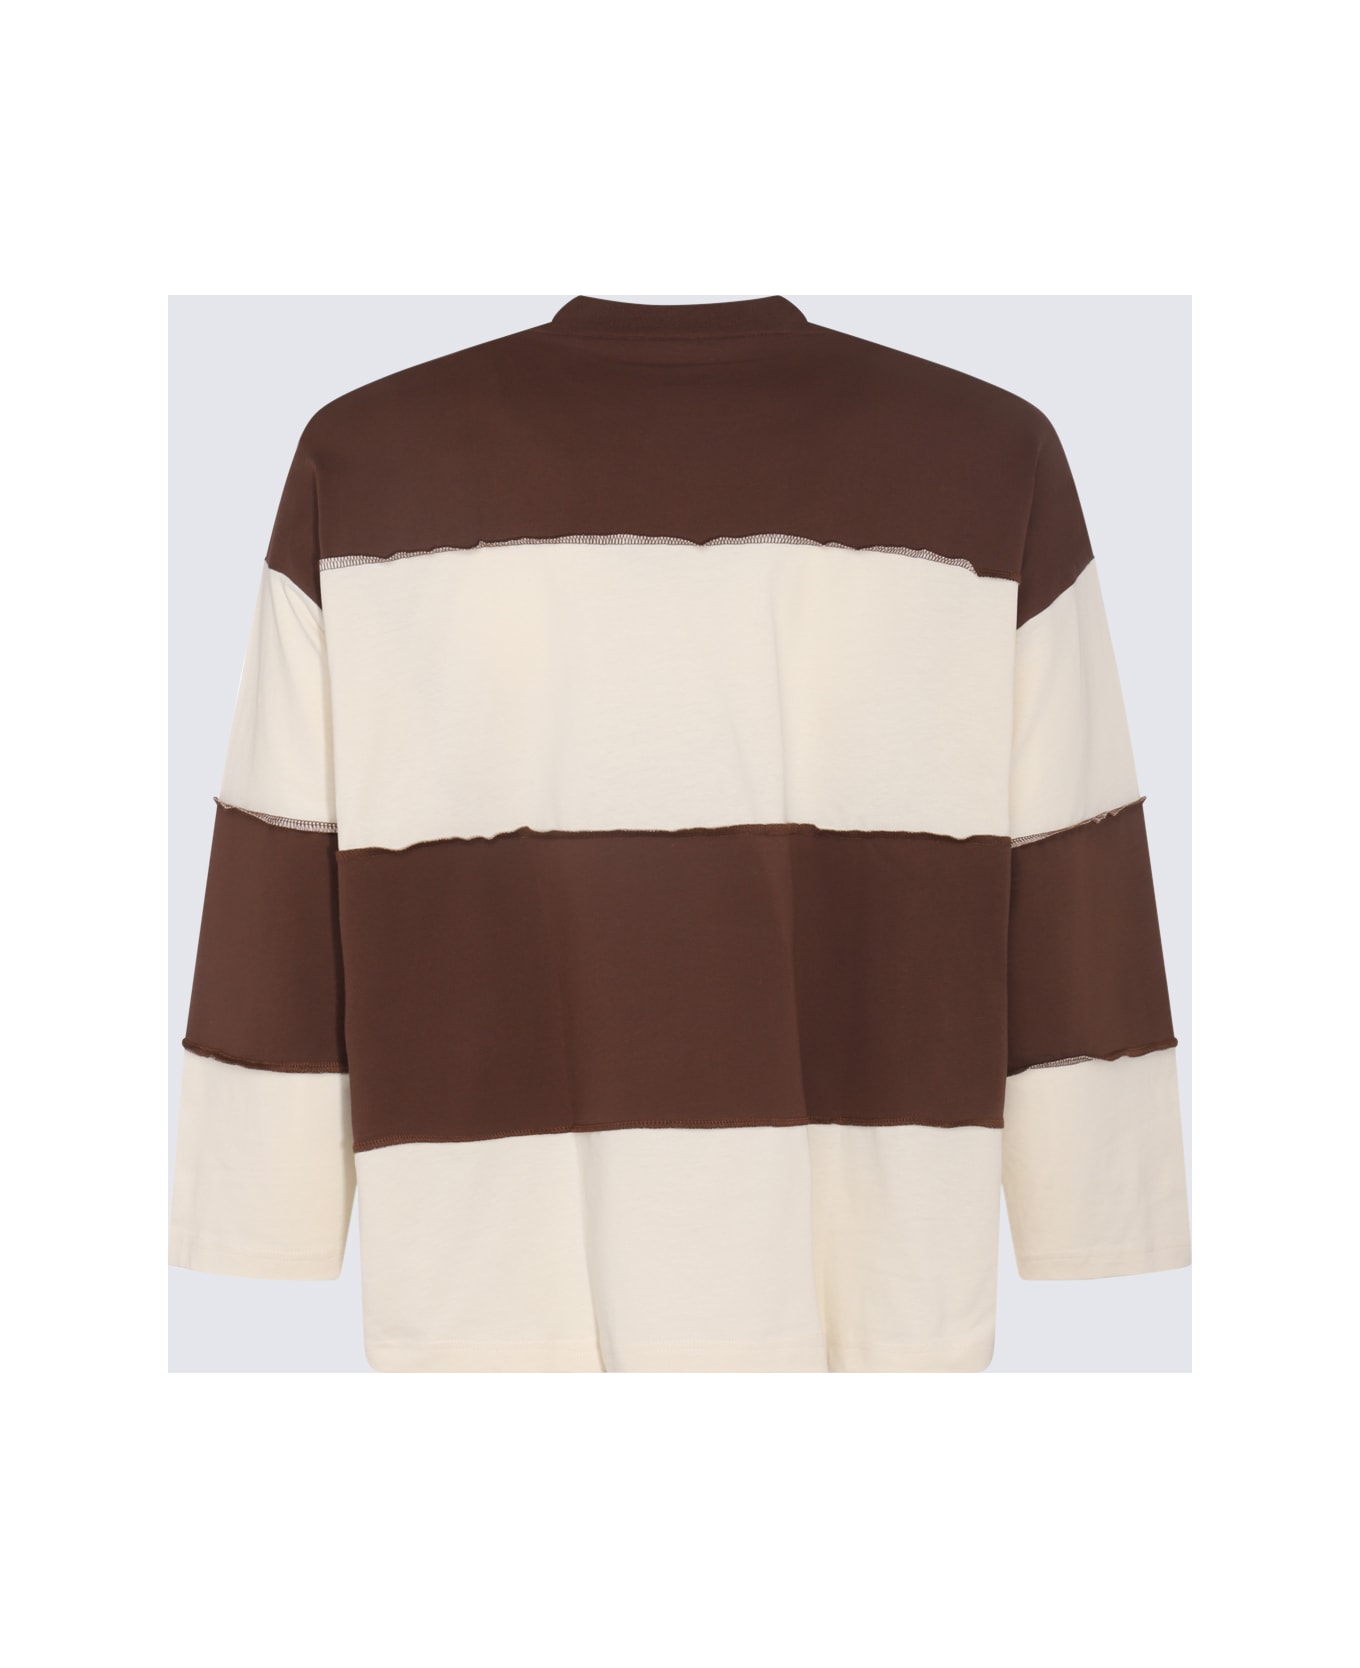 Sunnei Cream And Brown Cotton T-shirt - BROWN/LIGHT BEIGE